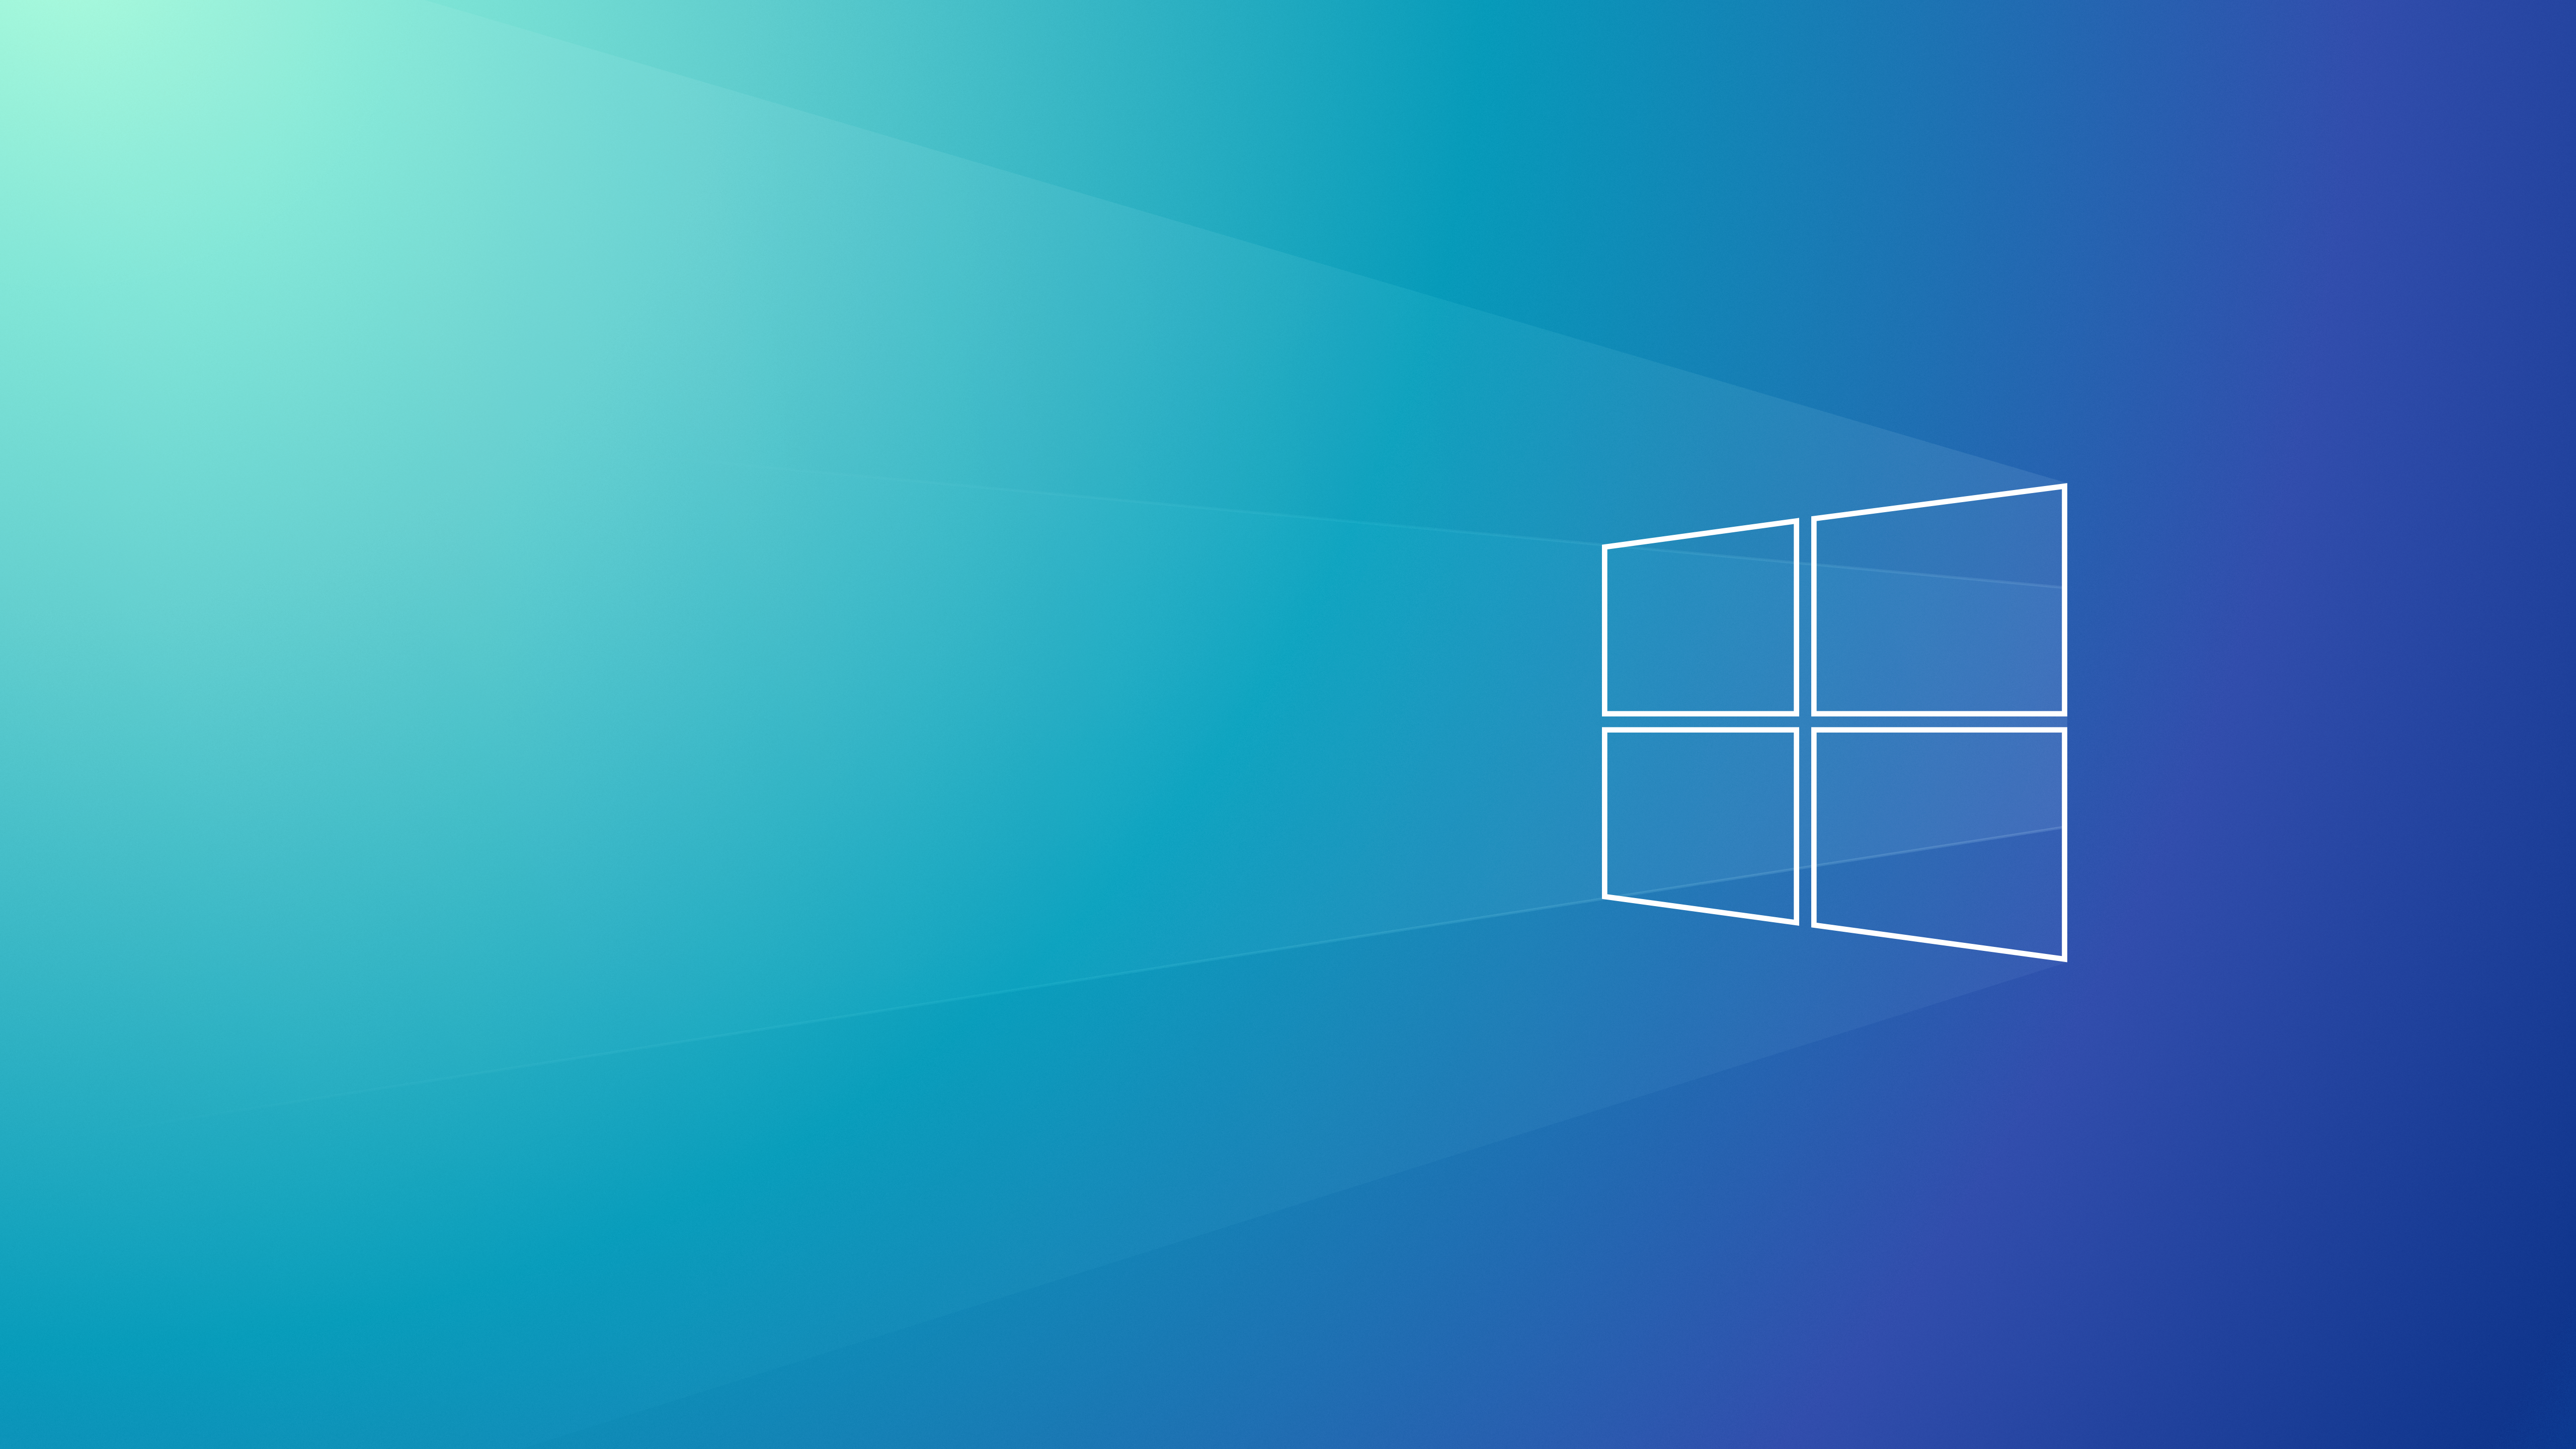 Windows 10 default wallpaper dark blue 4k by dpcdpc11